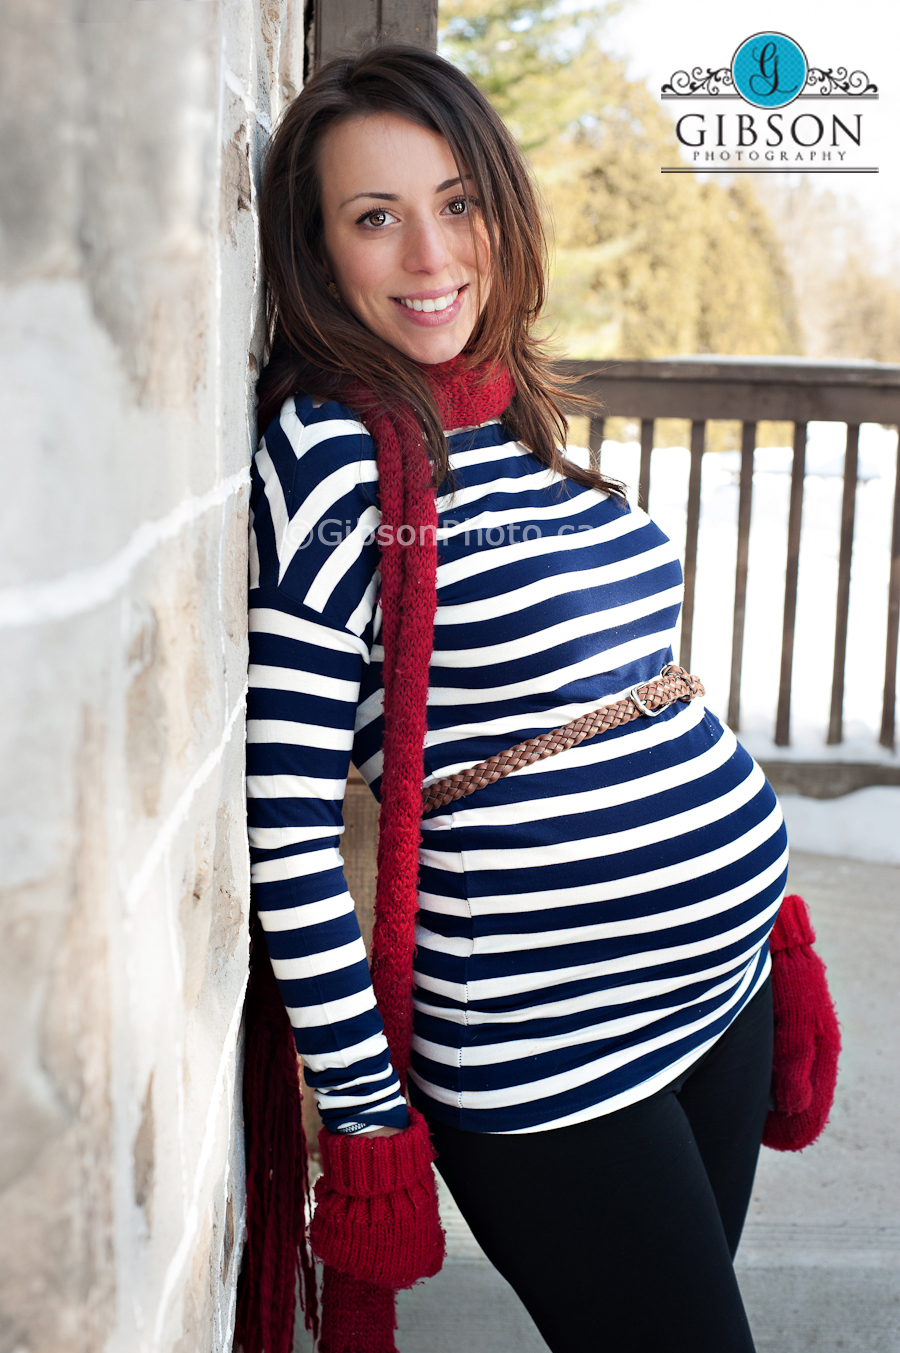 Outdoor Maternity Photography Burlington Ontario 